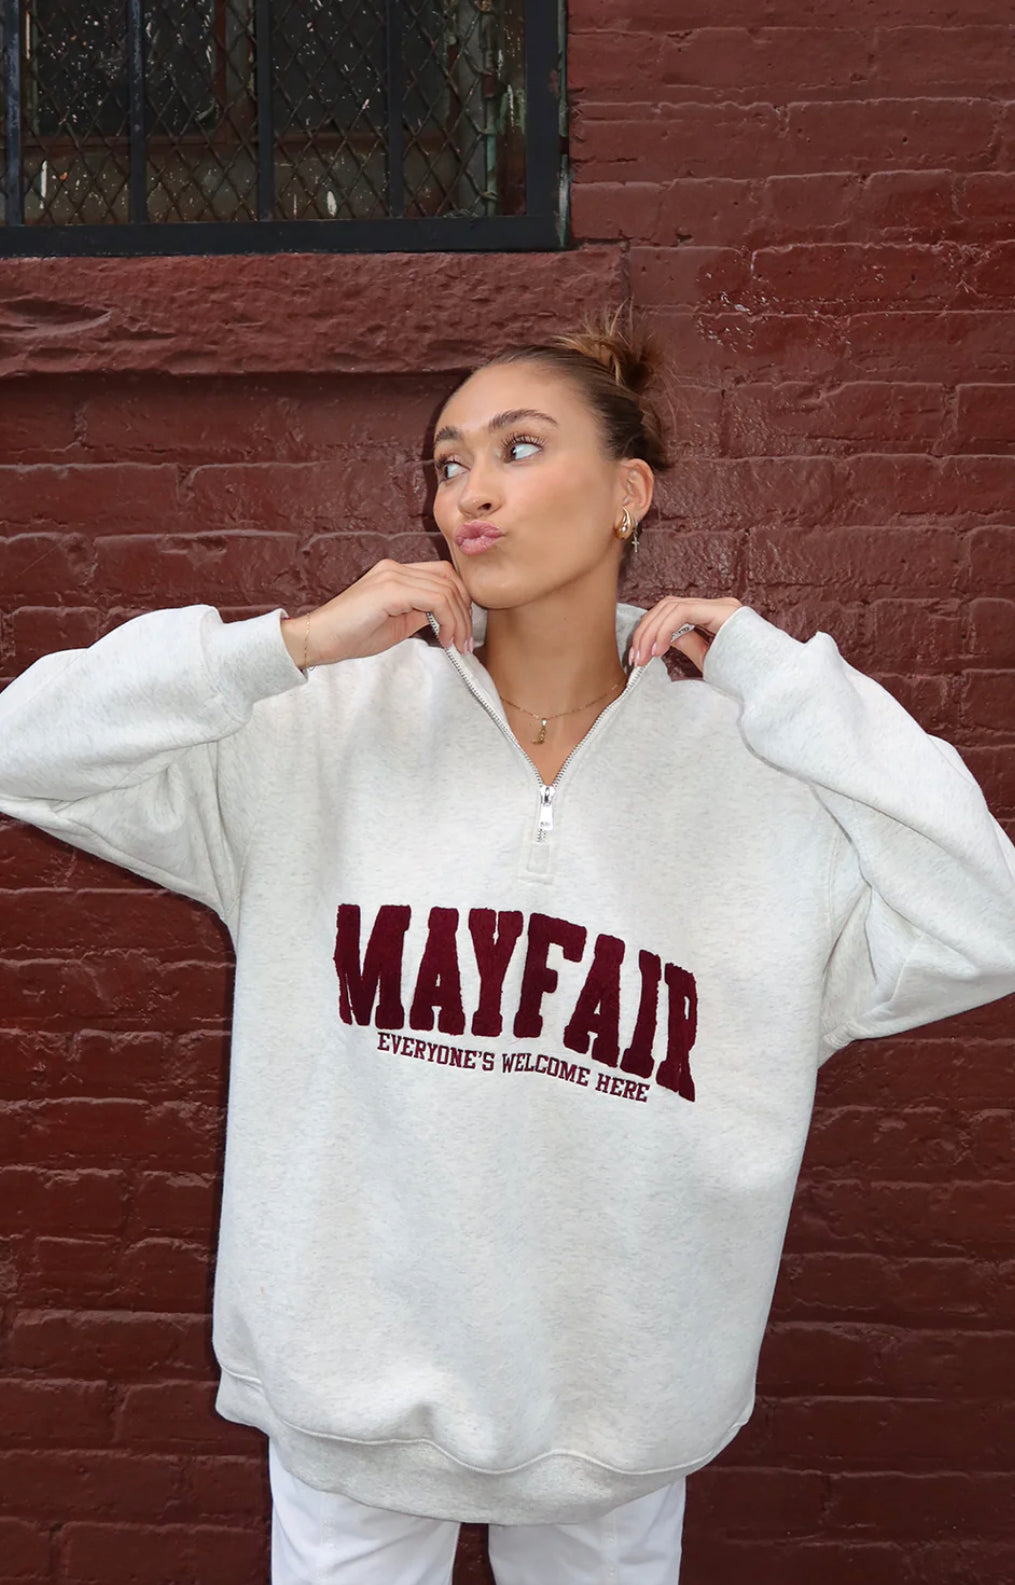 The Mayfair Group “Everyone’s Welcome Here” Half-Zip Sweatshirt